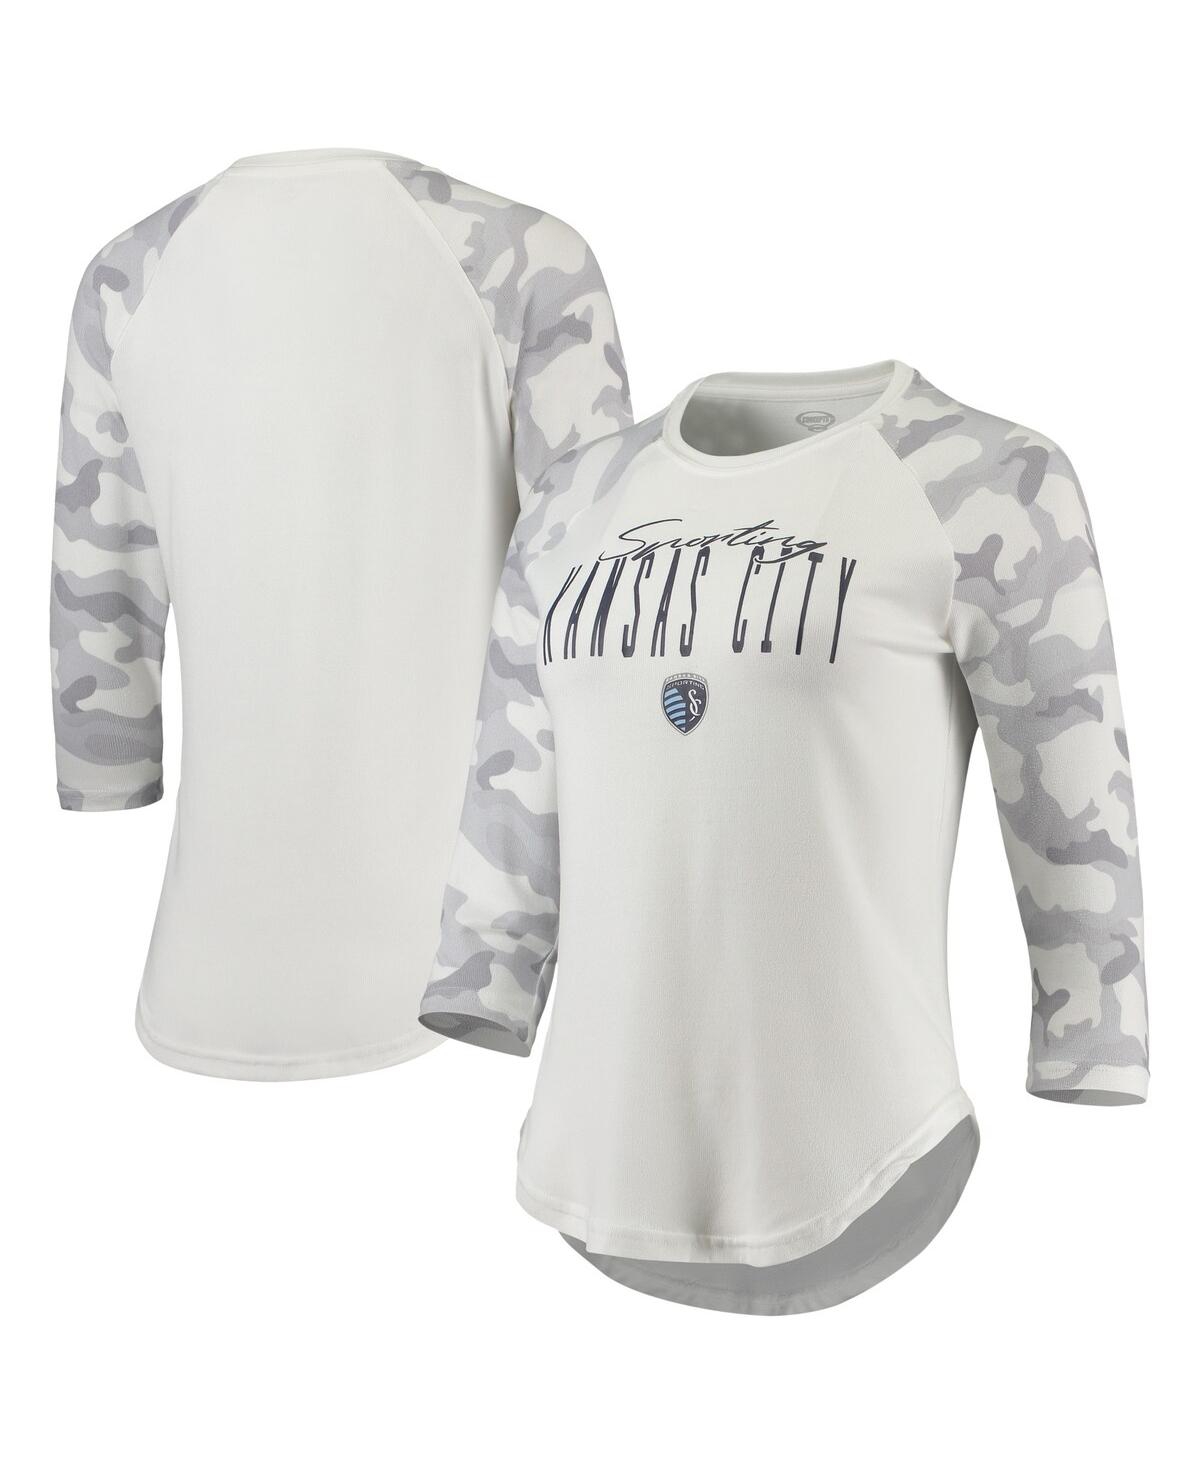 Women's Concepts Sport Cream, Gray Sporting Kansas City Composite 3/4-Sleeve Raglan Top - Cream, Gray